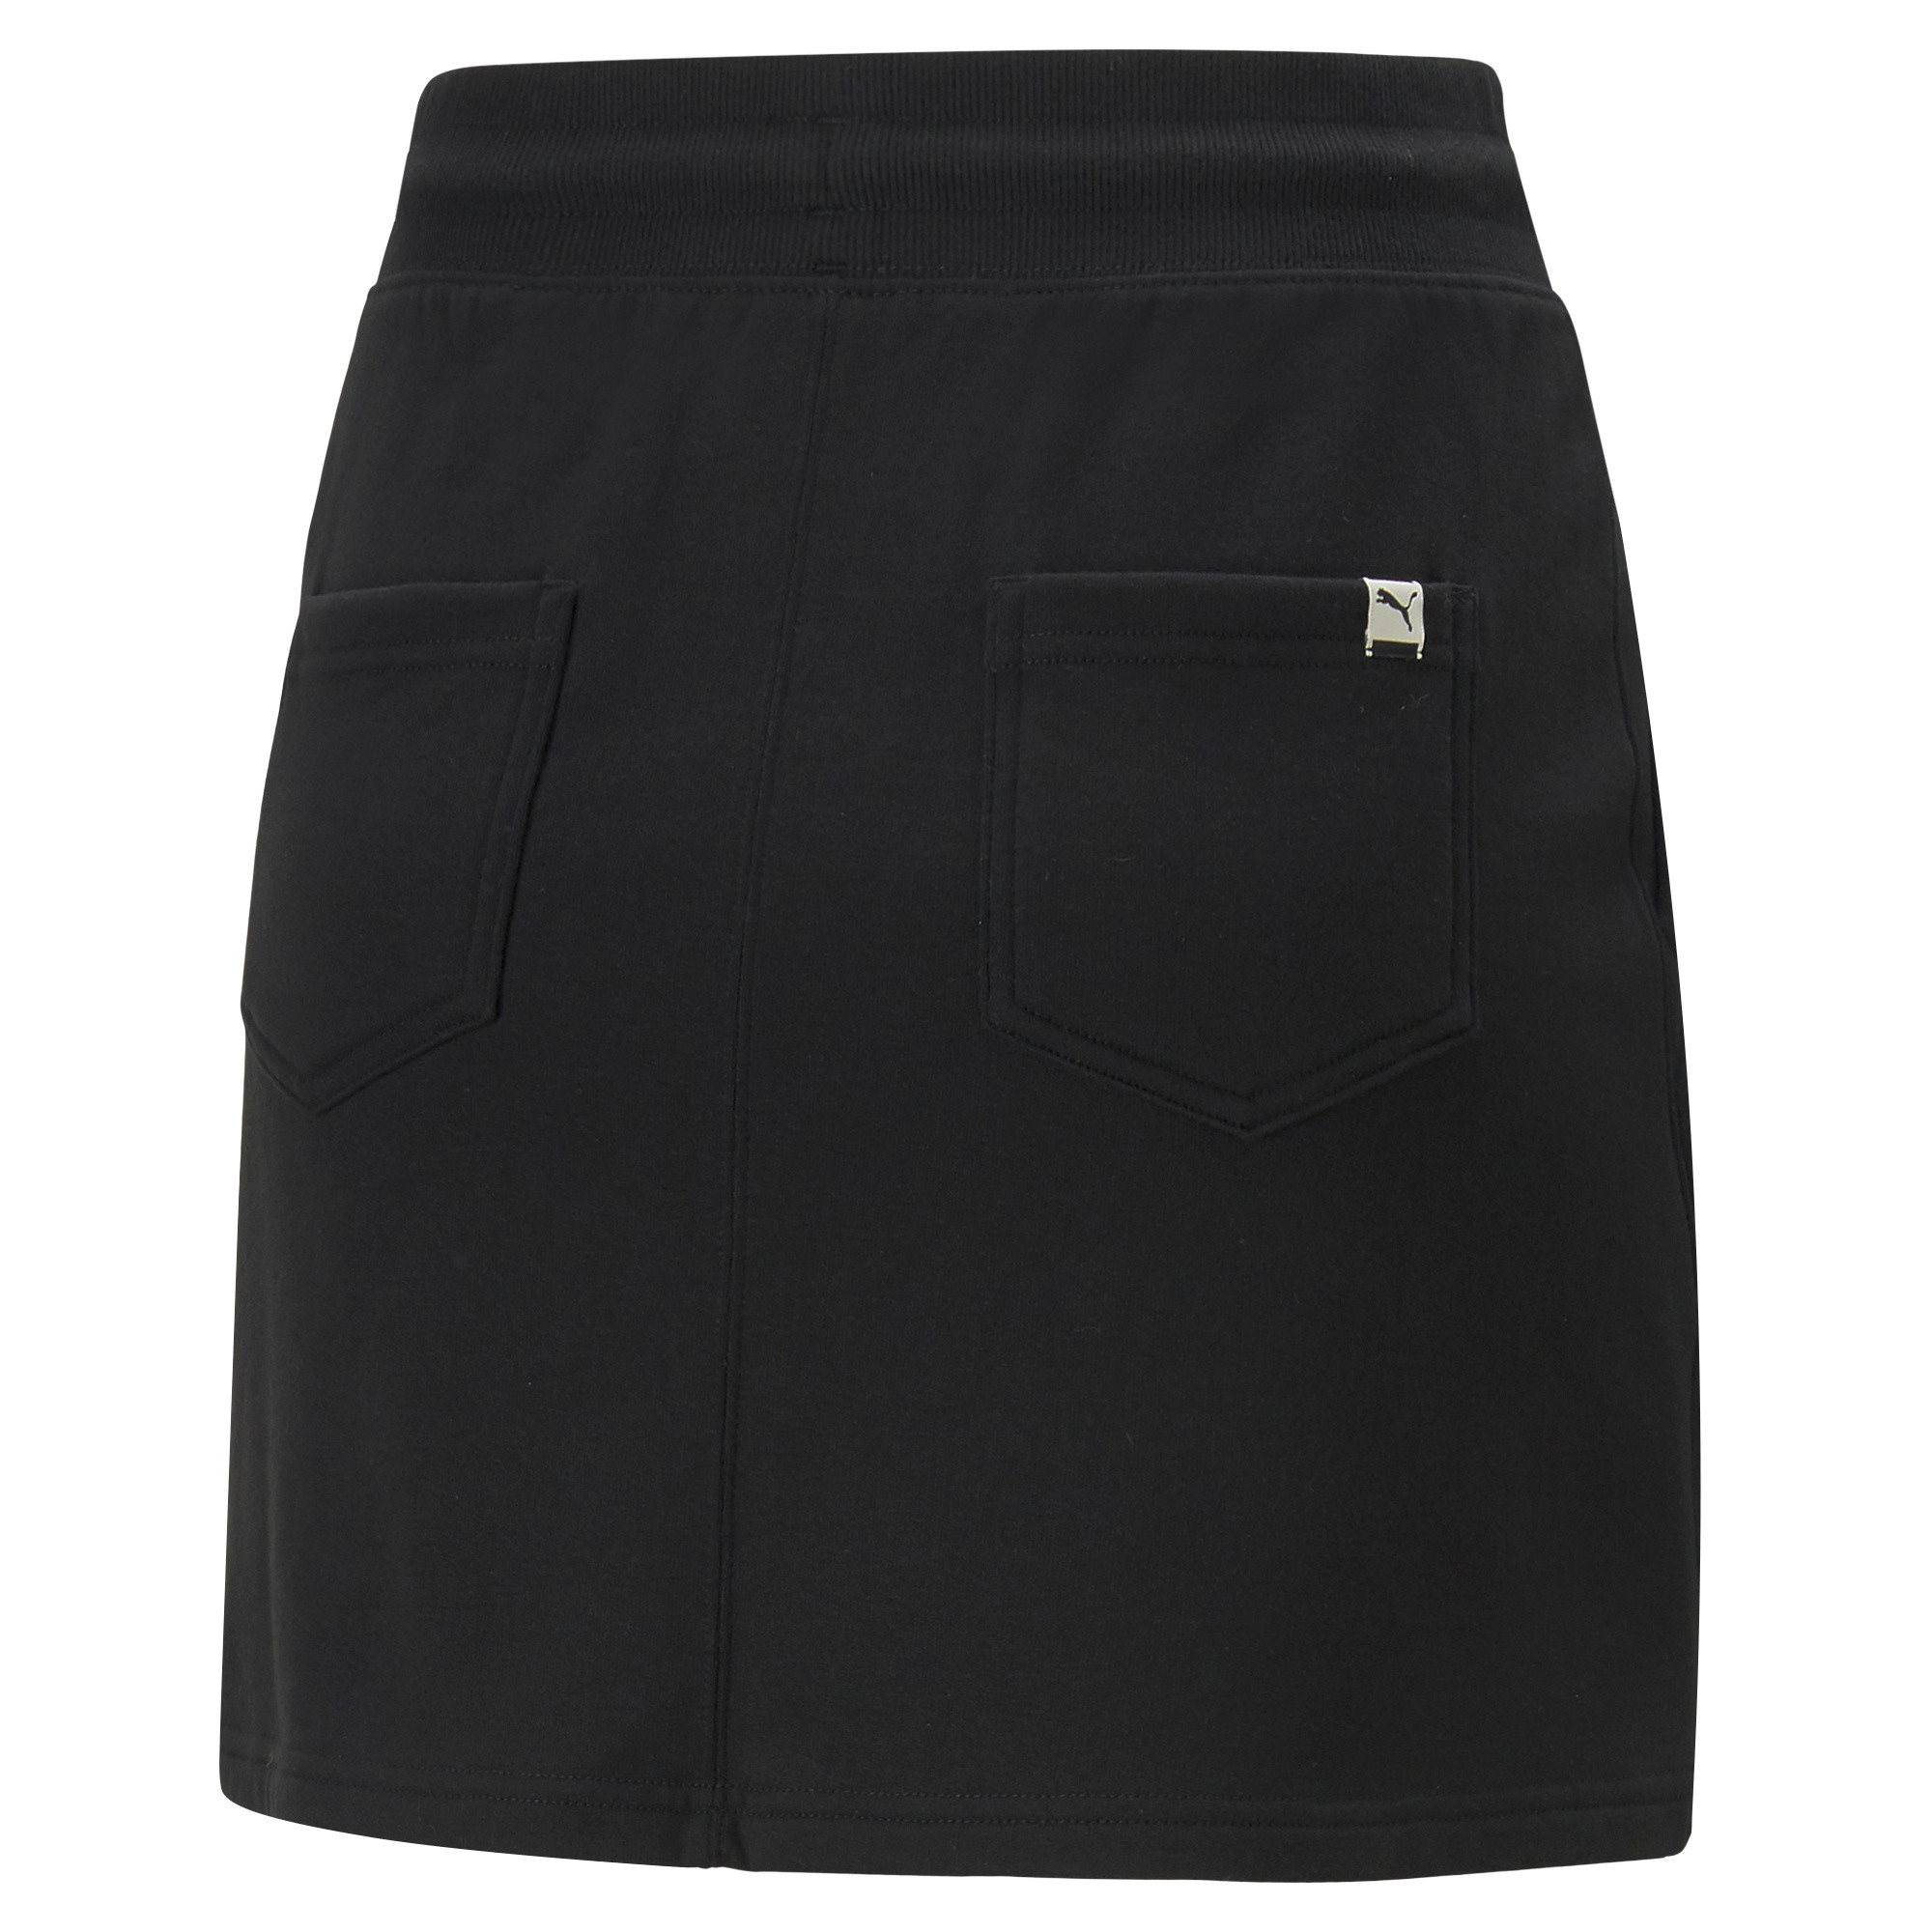 Downtown Skirt, Black, large image number 1